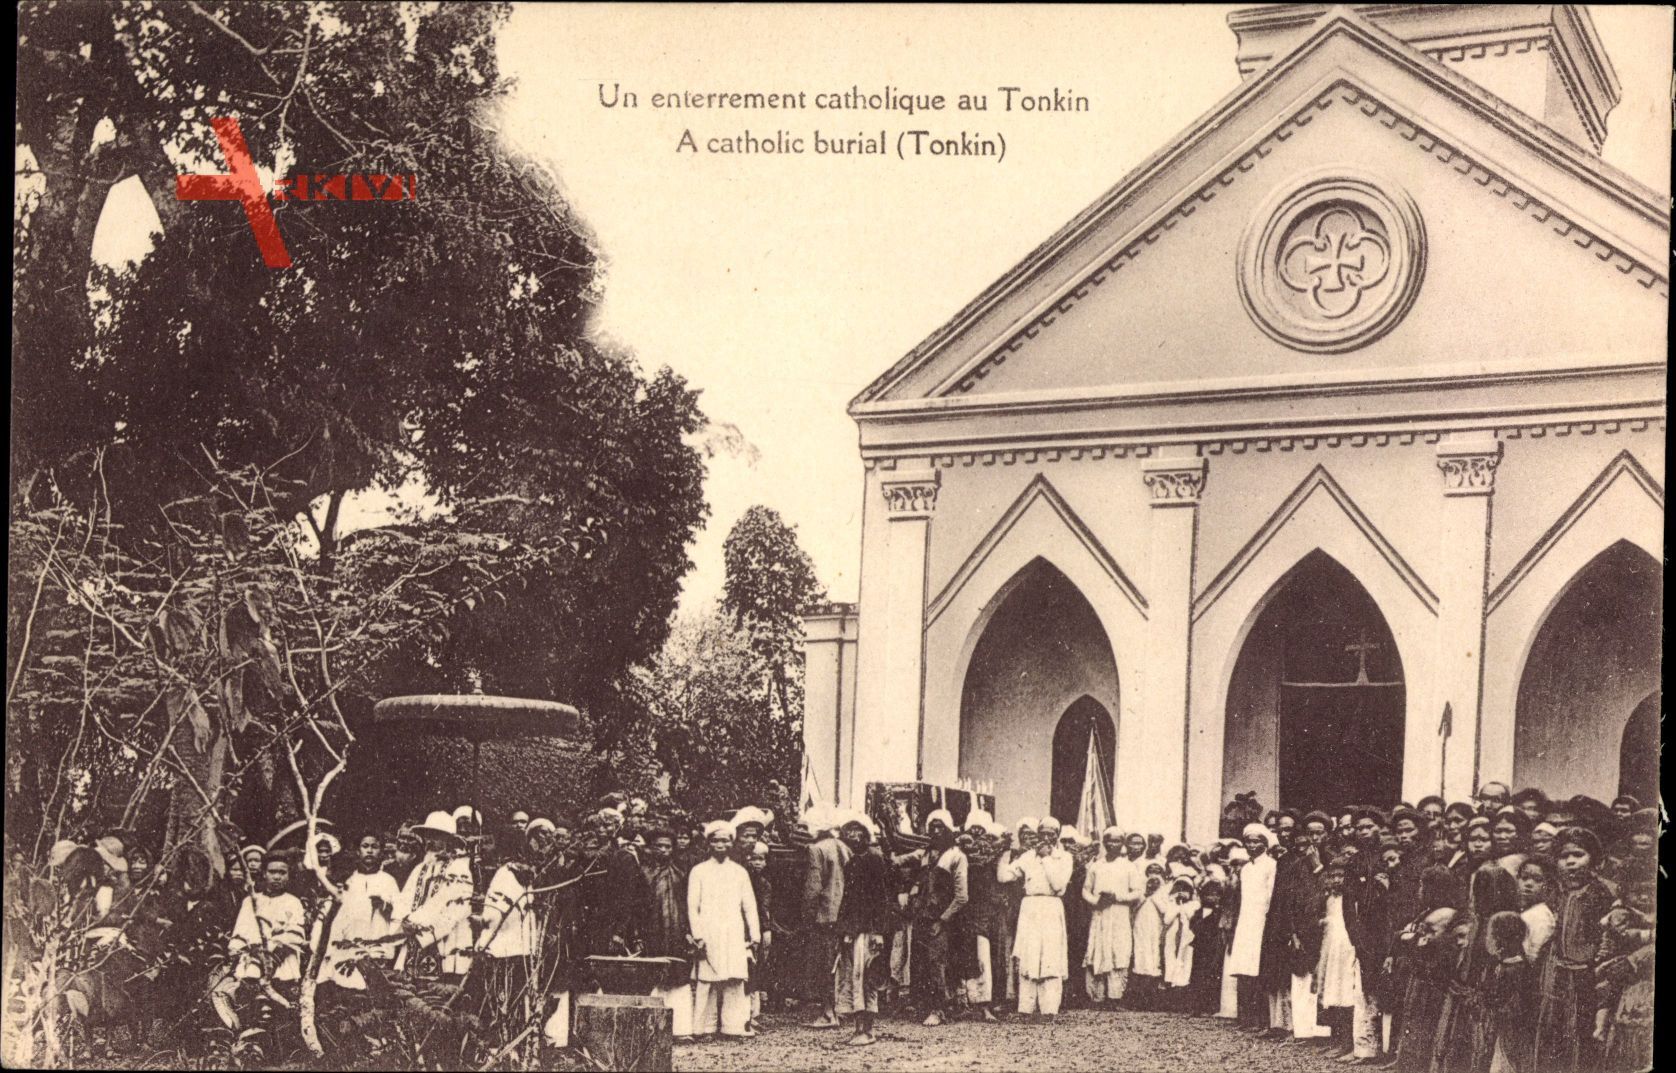 Tonkin Vietnam, Catholic burial, Katholisches Begräbnis, Kirche